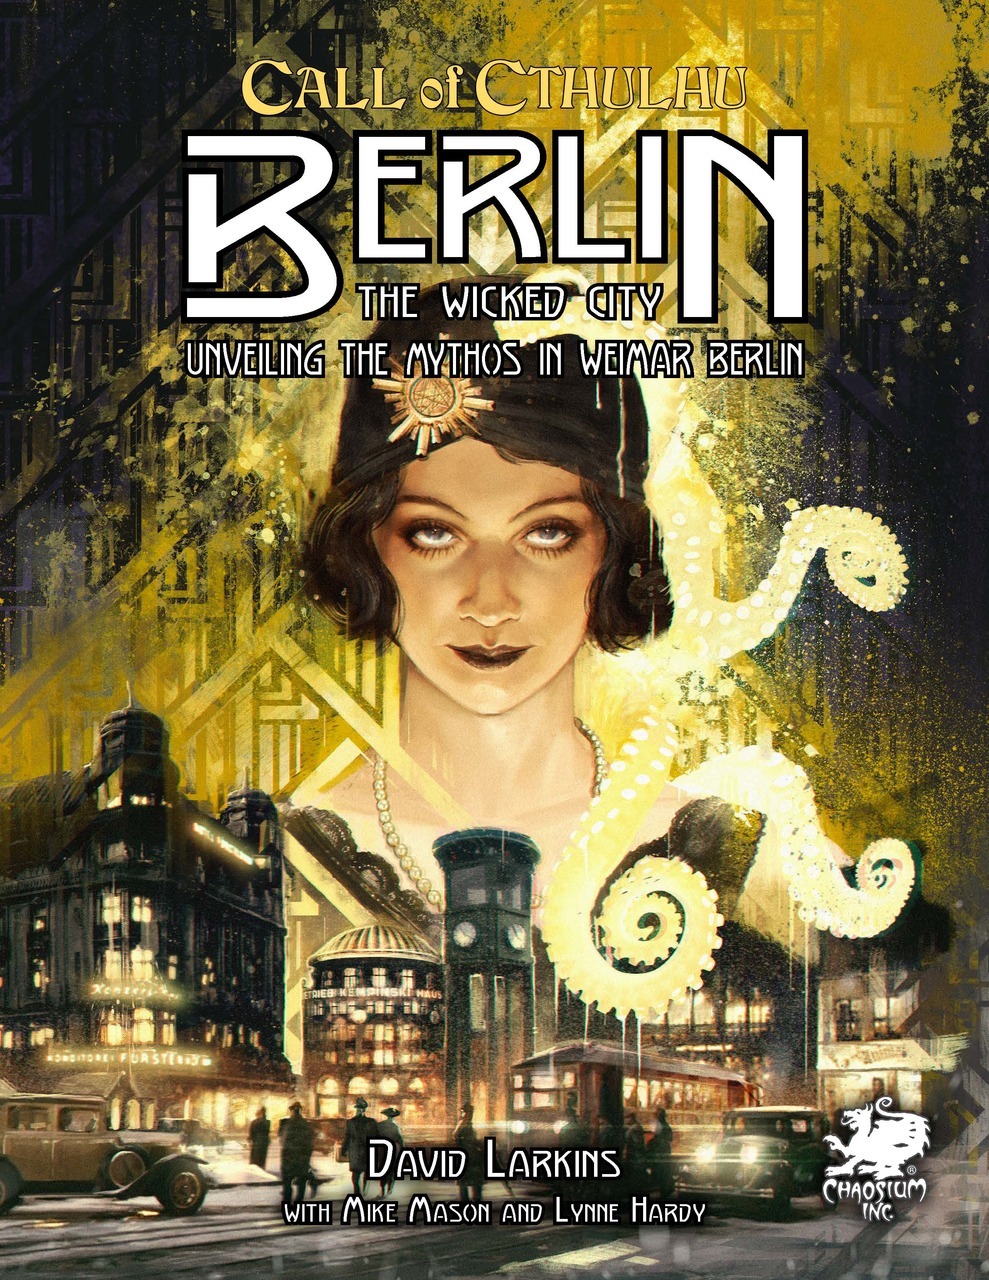 Afbeelding van het spel Call of Cthulhu: Berlin, The Wicked City